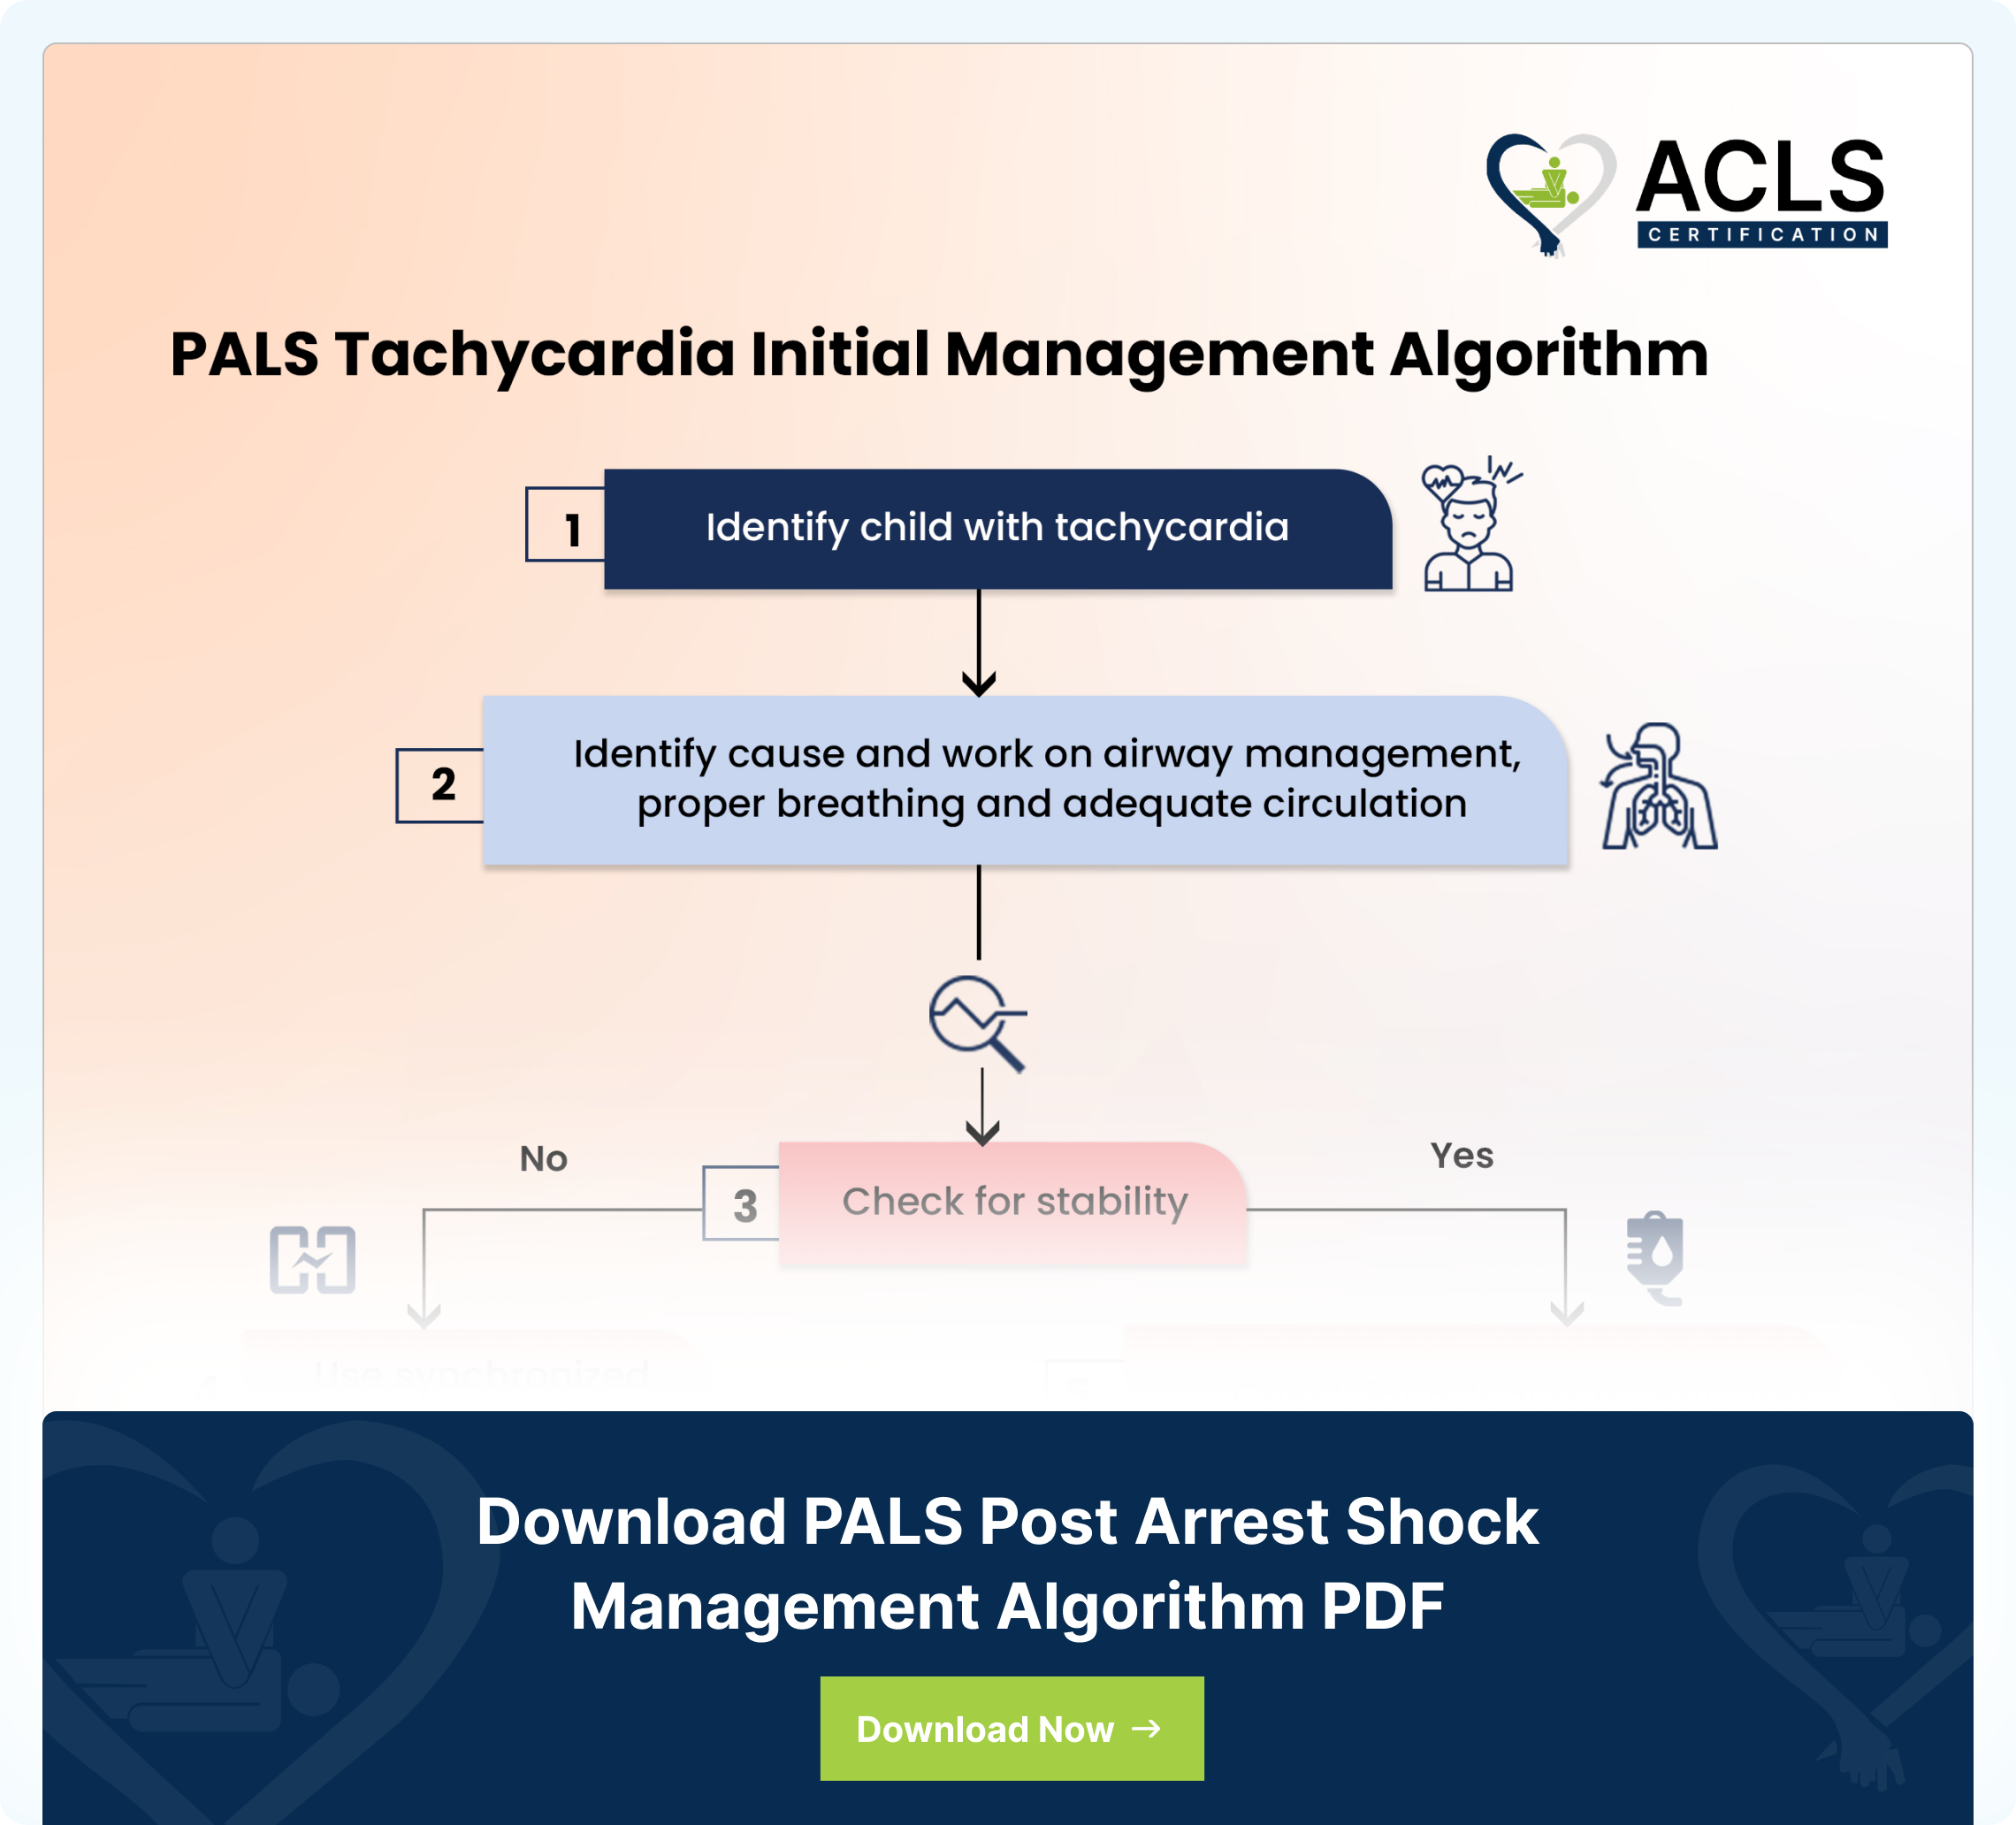 pals subalgo Tachycardia Initial Management Algorithm